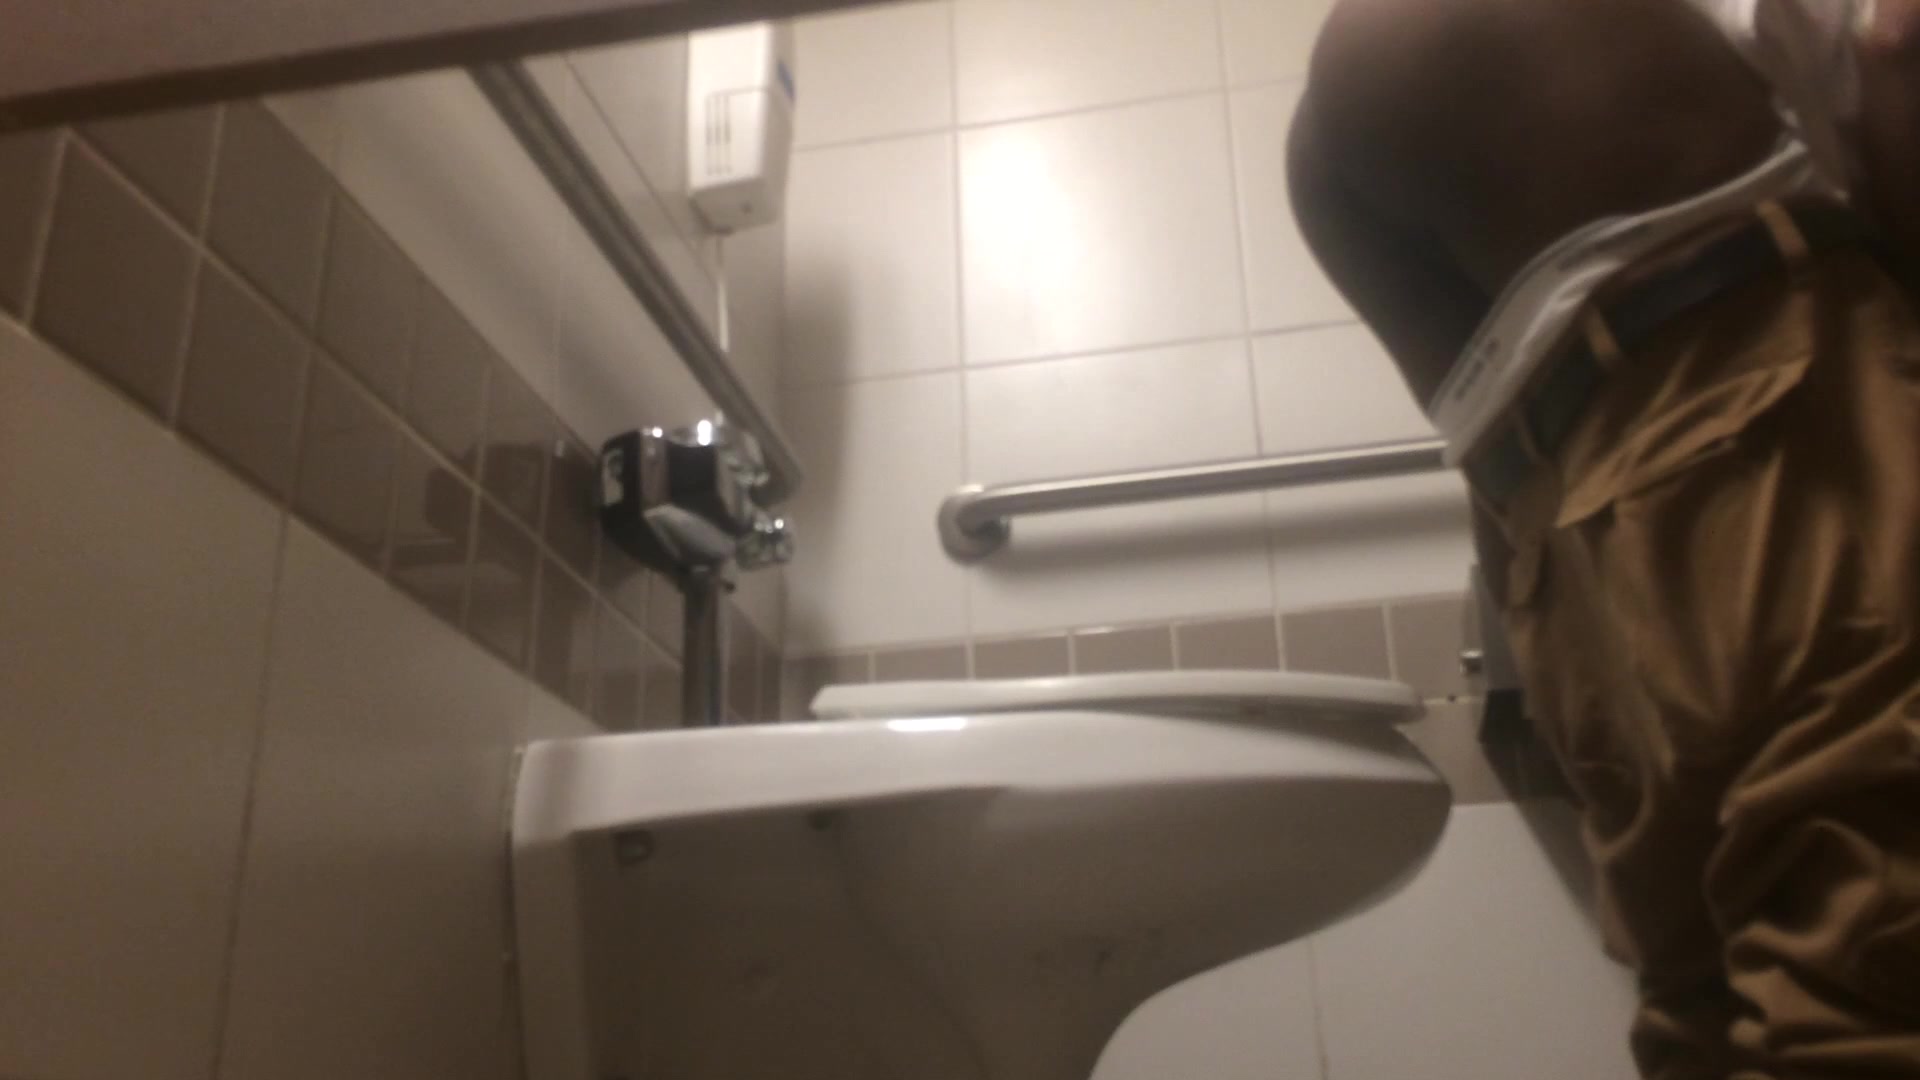 Spy cam in public toilet - video 3